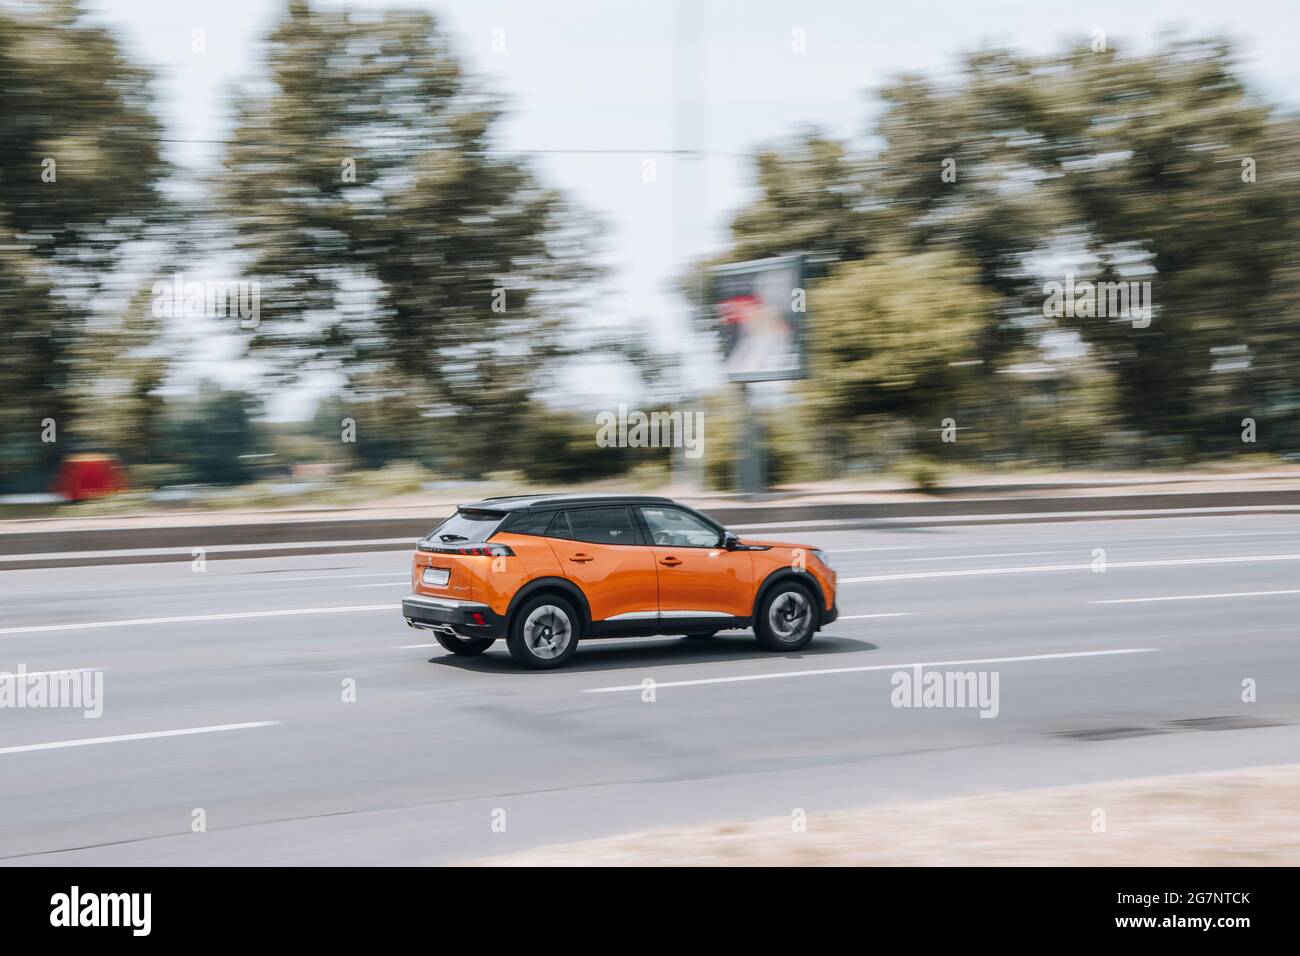 Ukraine, Kyiv - 2 June 2021: Black Peugeot 407 car moving on the street.  Editorial Stock Photo - Alamy